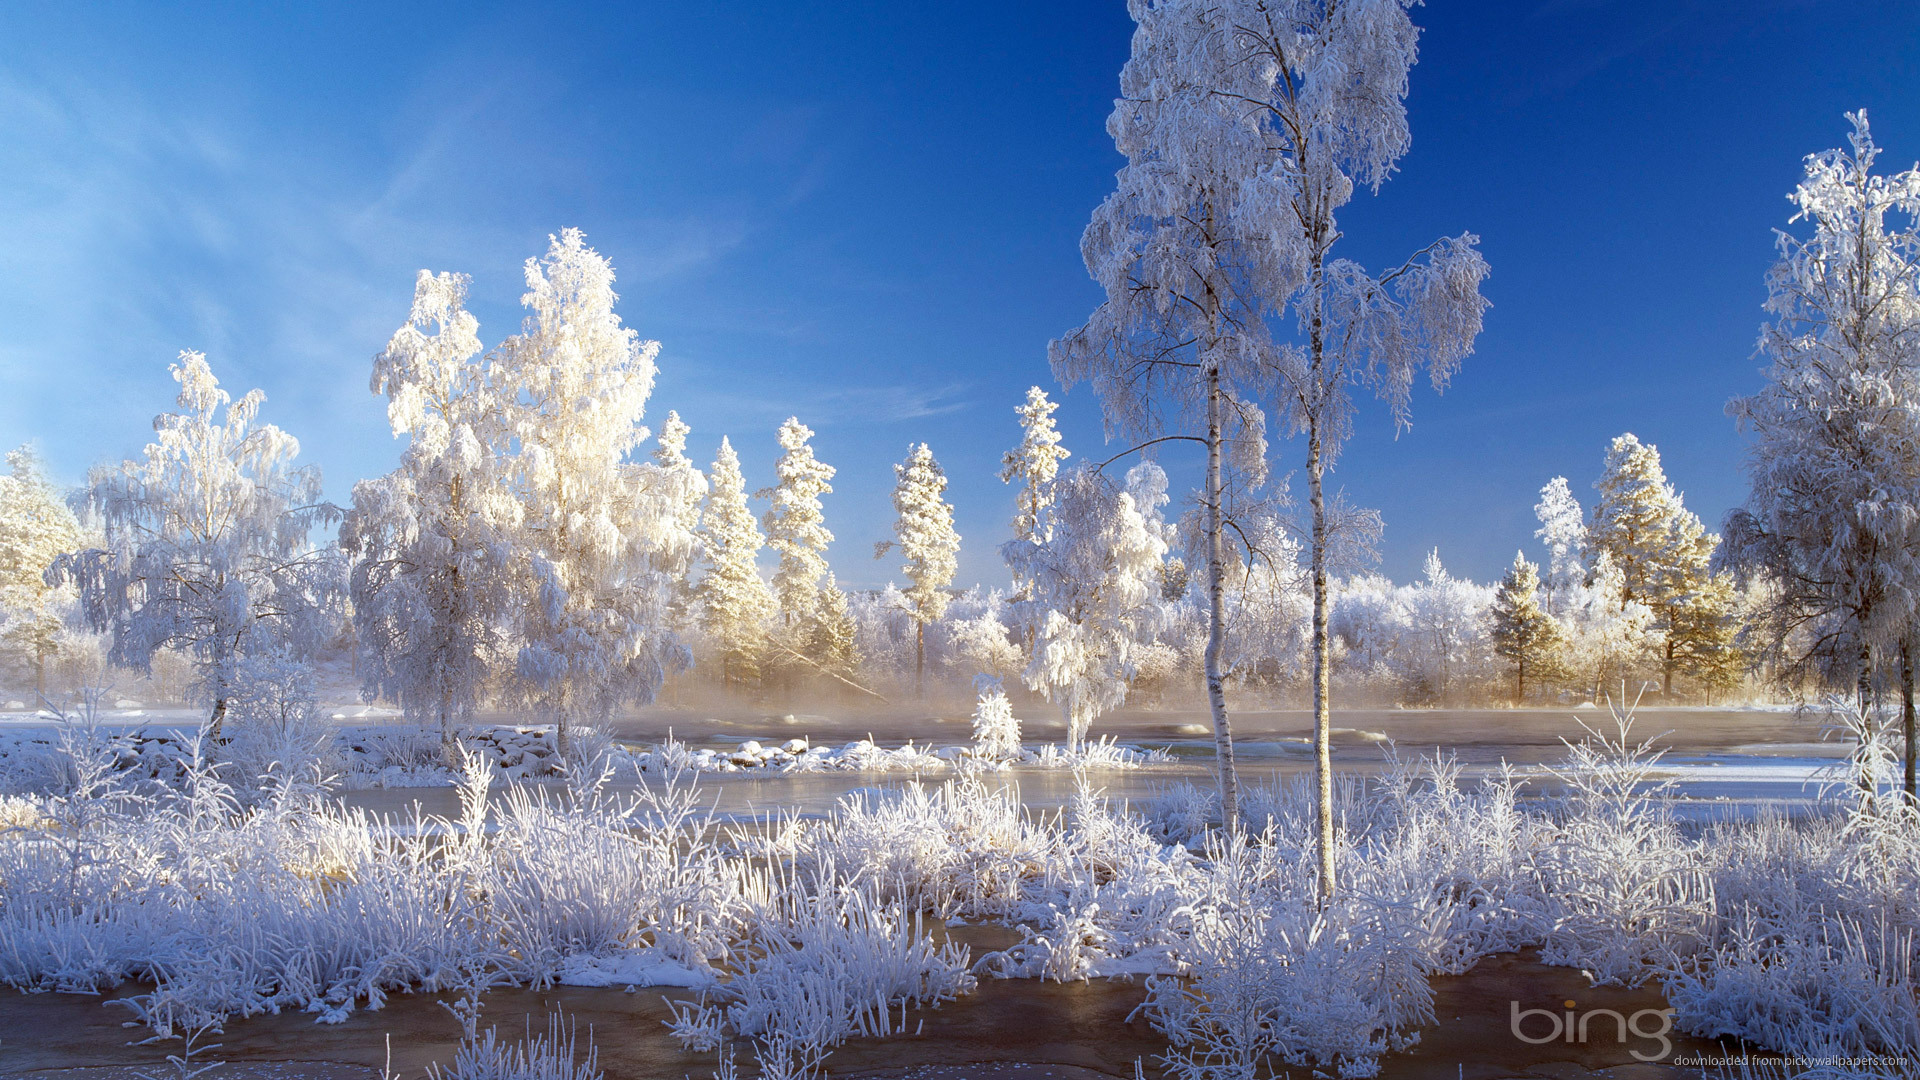 Bing Winter Landscape Picture